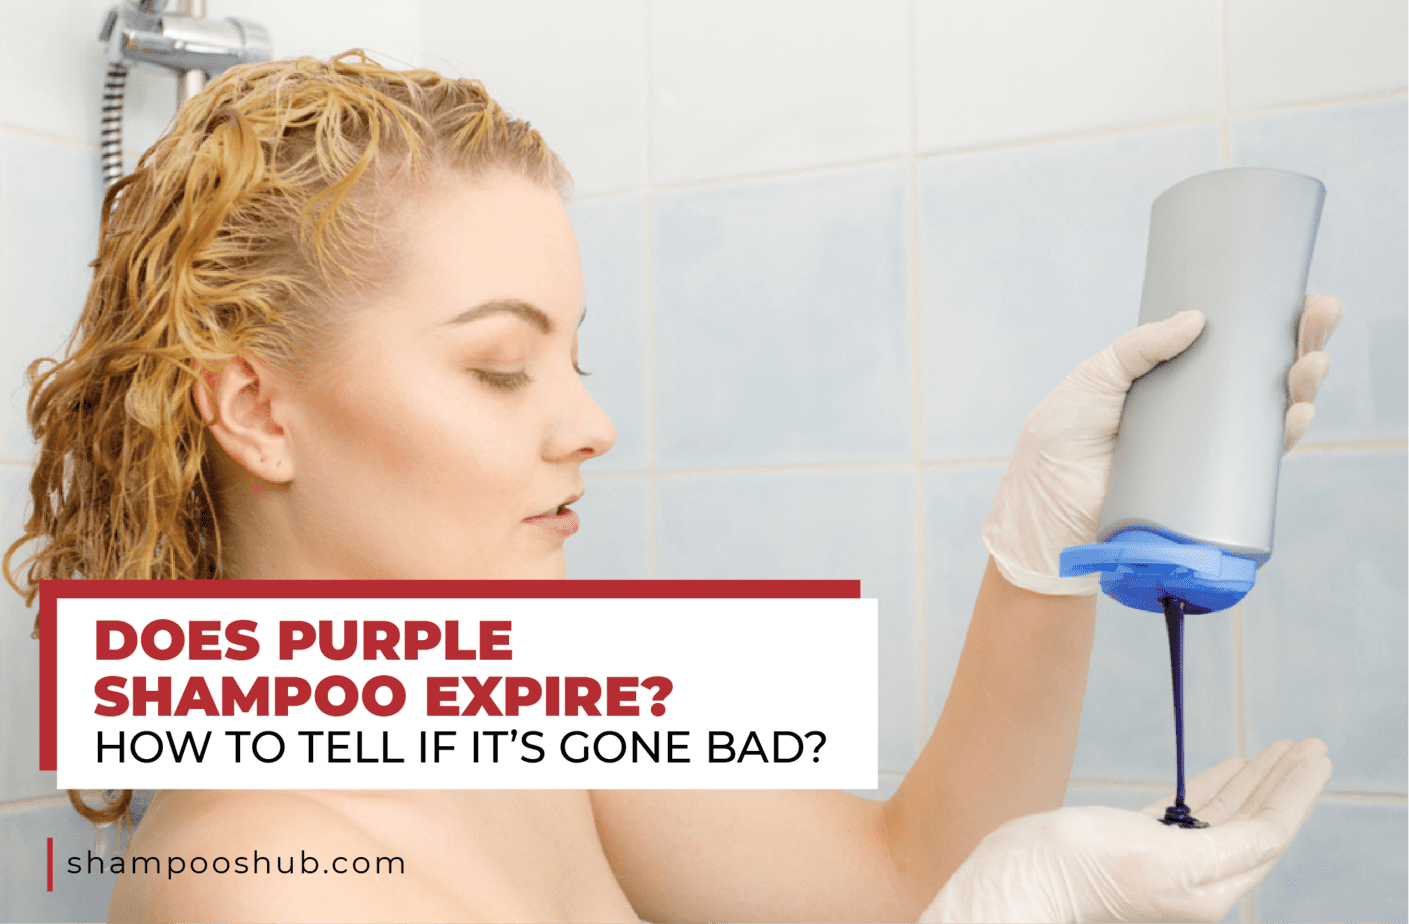 Does Purple Shampoo Expire?